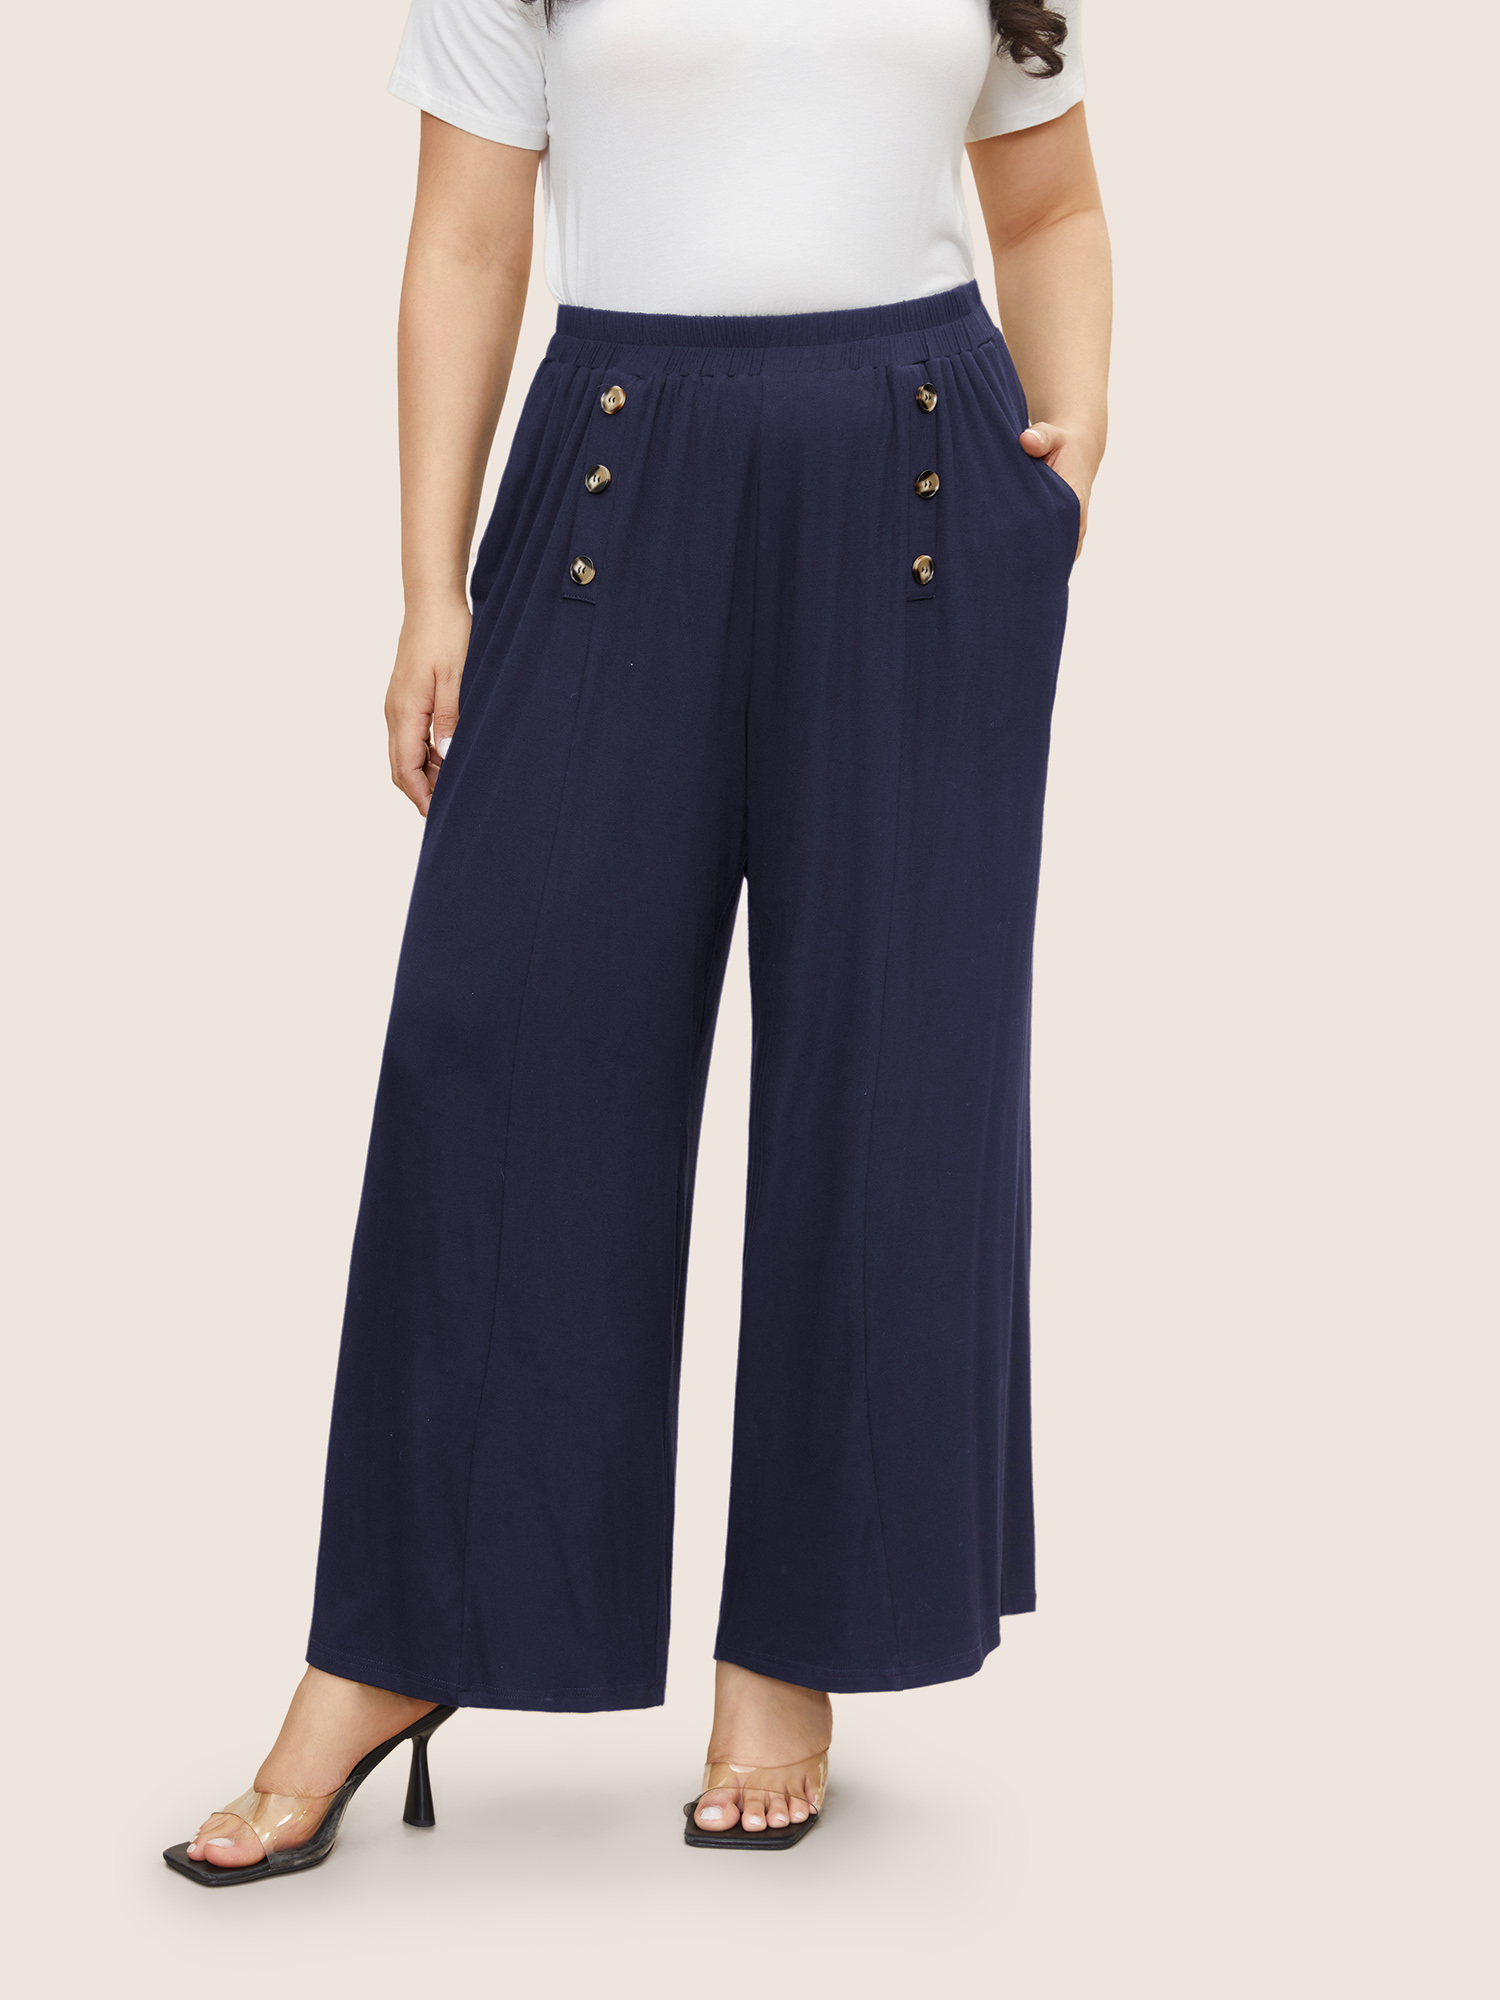 

Plus Size Supersoft Essentials Button Detail Wide Leg Pants Women Indigo Elegant Wide Leg High Rise Everyday Pants BloomChic